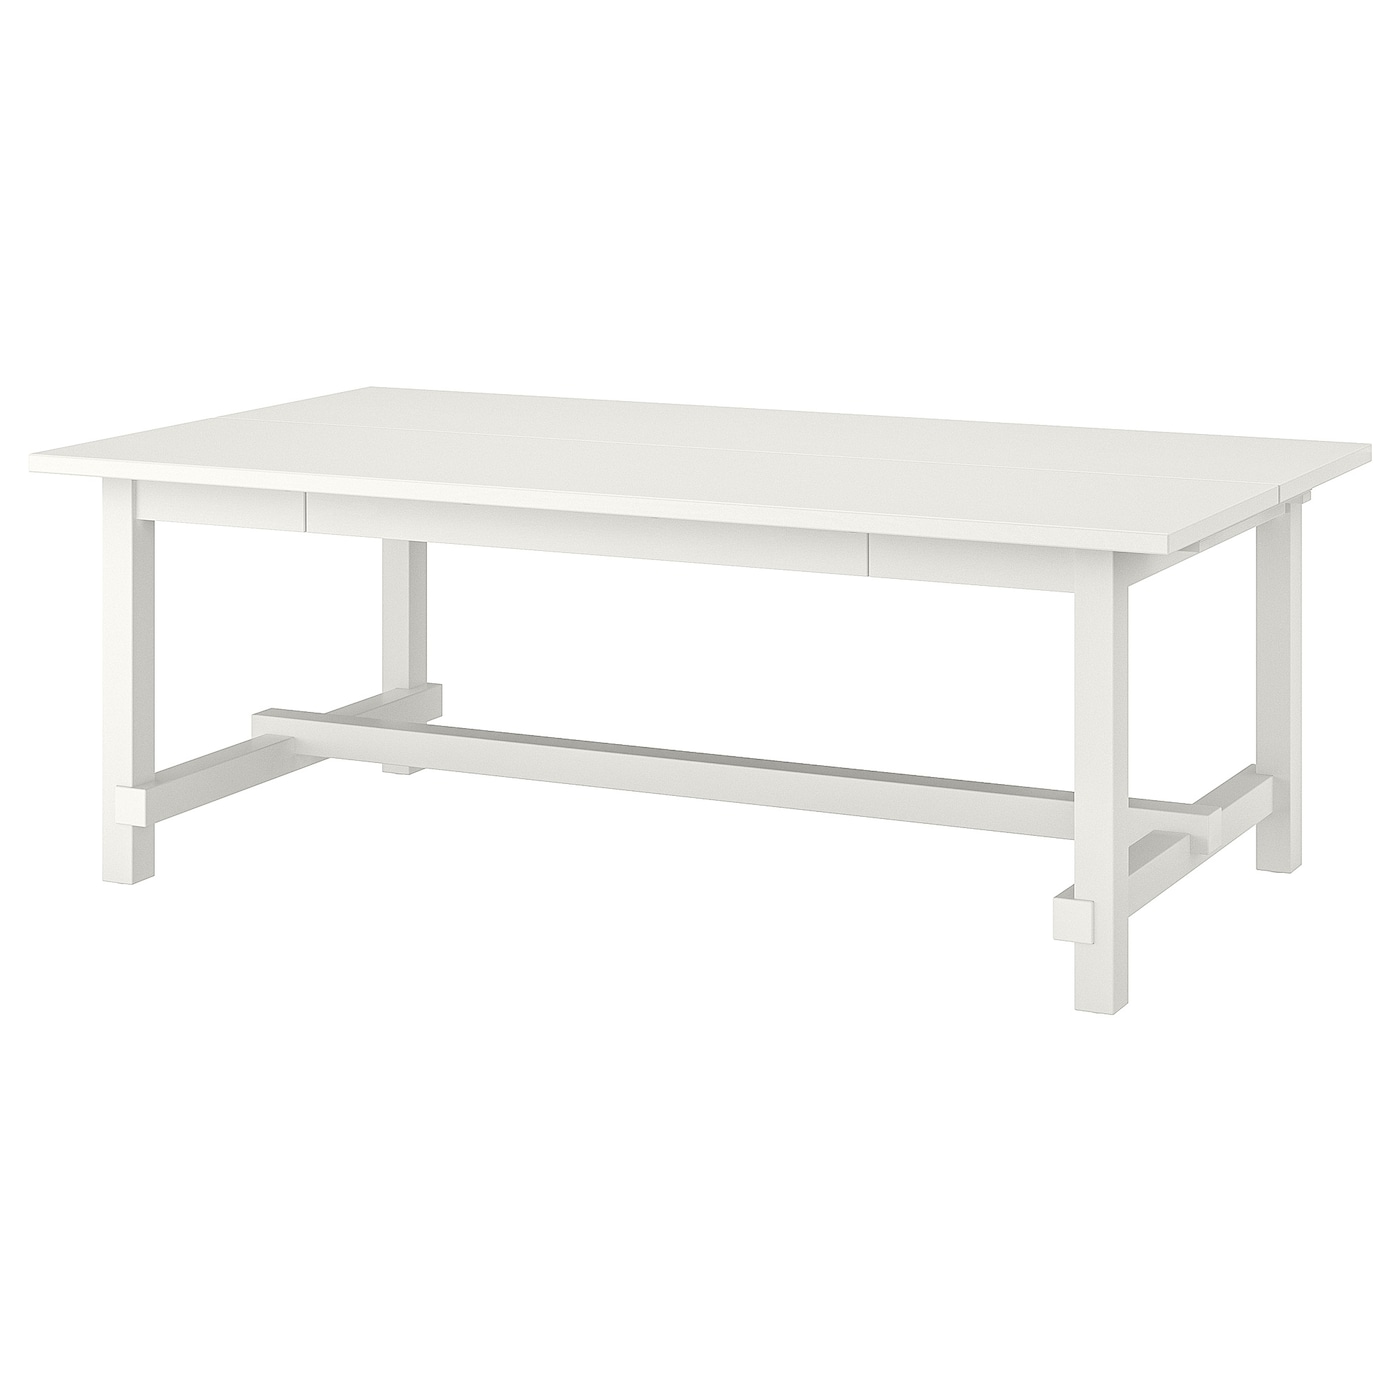 Раздвижной обеденный стол - IKEA NORDVIKEN/НОРДВКЕН ИКЕА, 75х210/289х105 см, белый